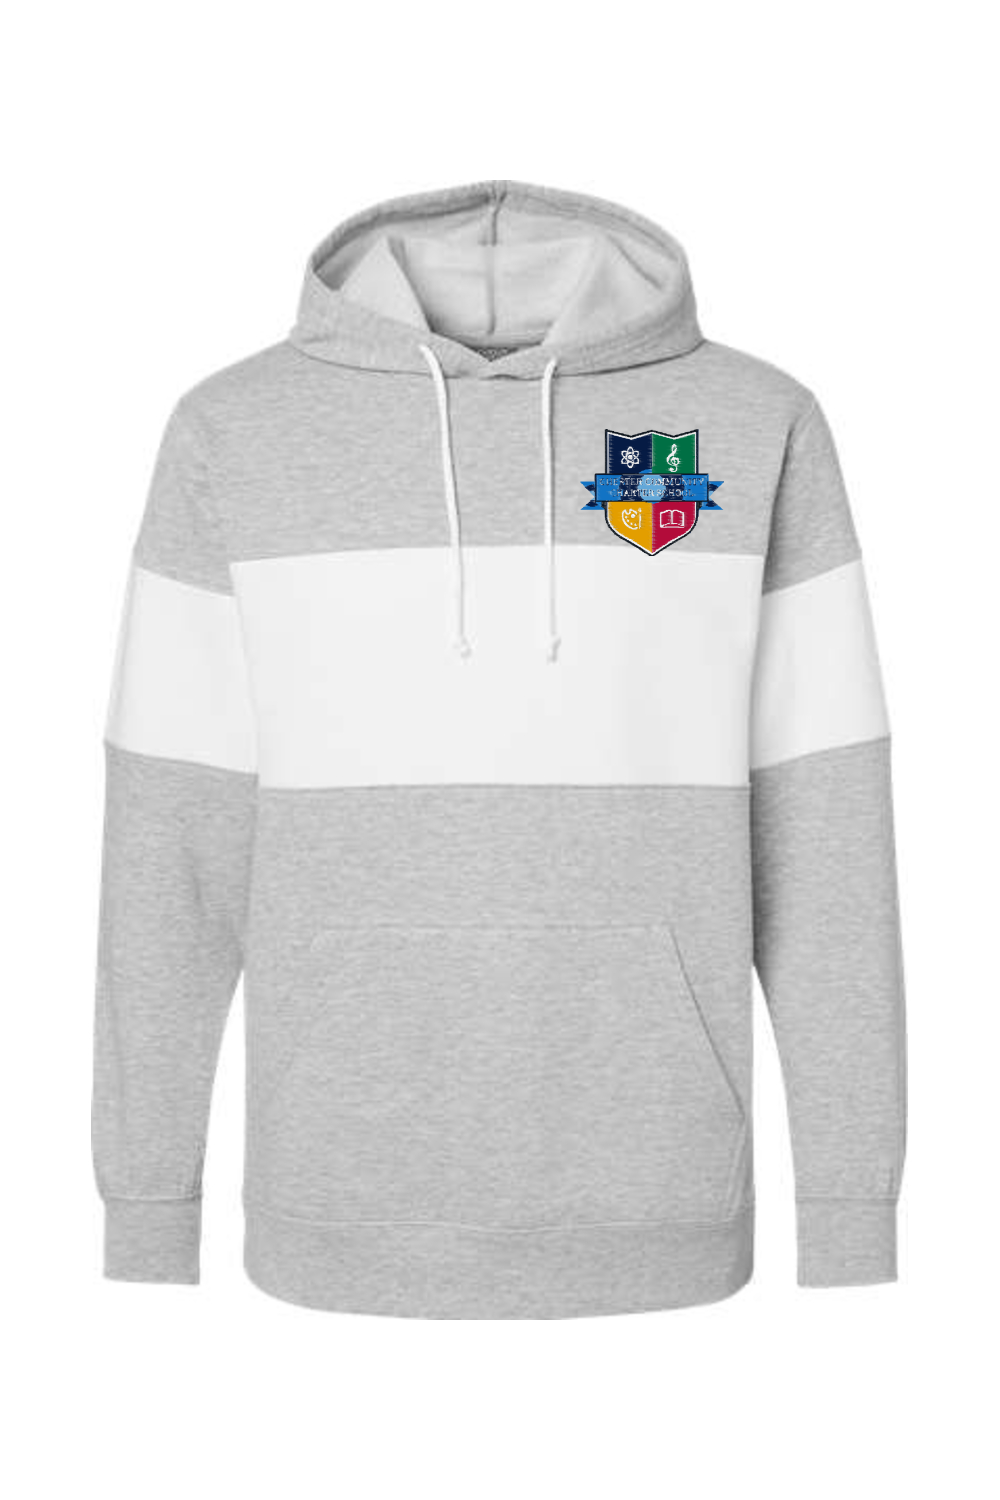 CCCS Logo MV Sport Classic Fleece Colorblocked Hooded Sweatshirt